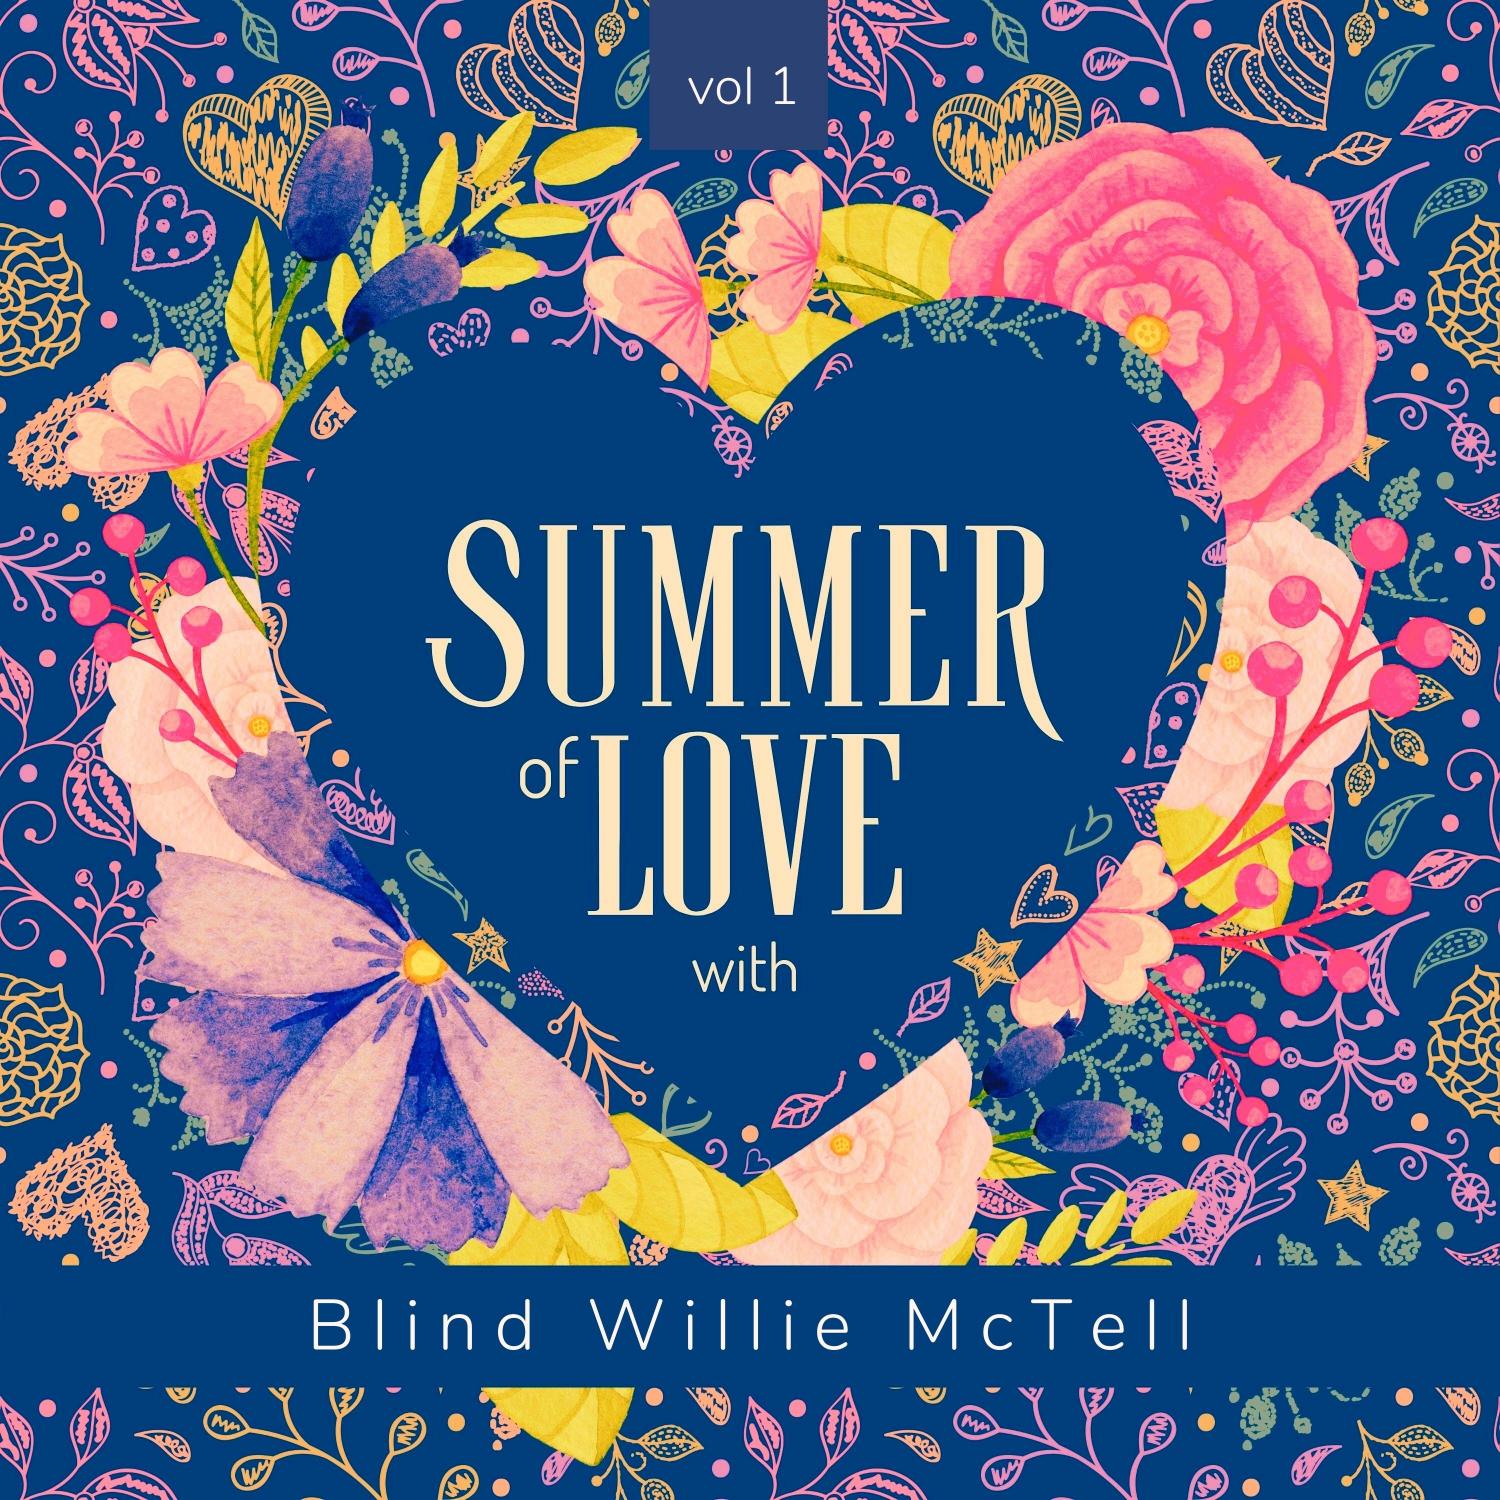 Blind Willie McTell - Teasing Brown (Original Mix)